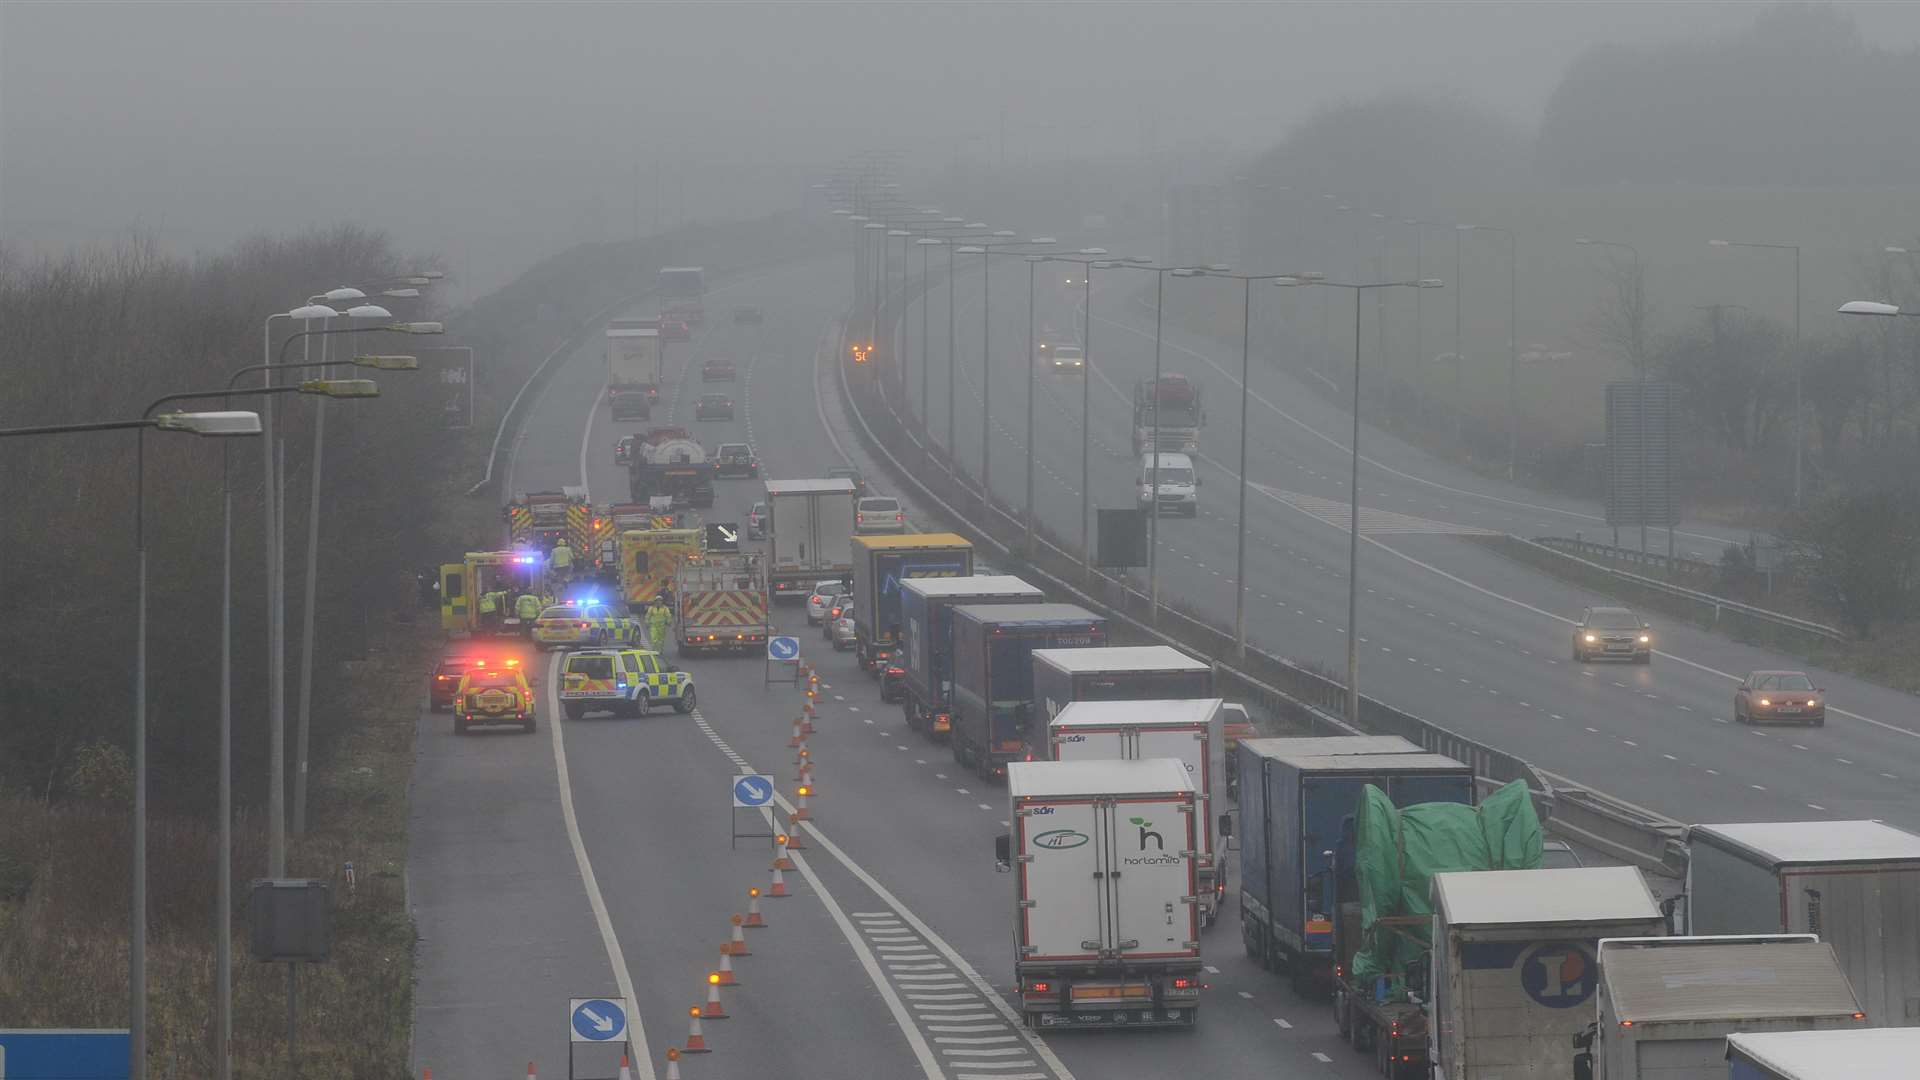 Scene of the crash on the M20 near Folkestone